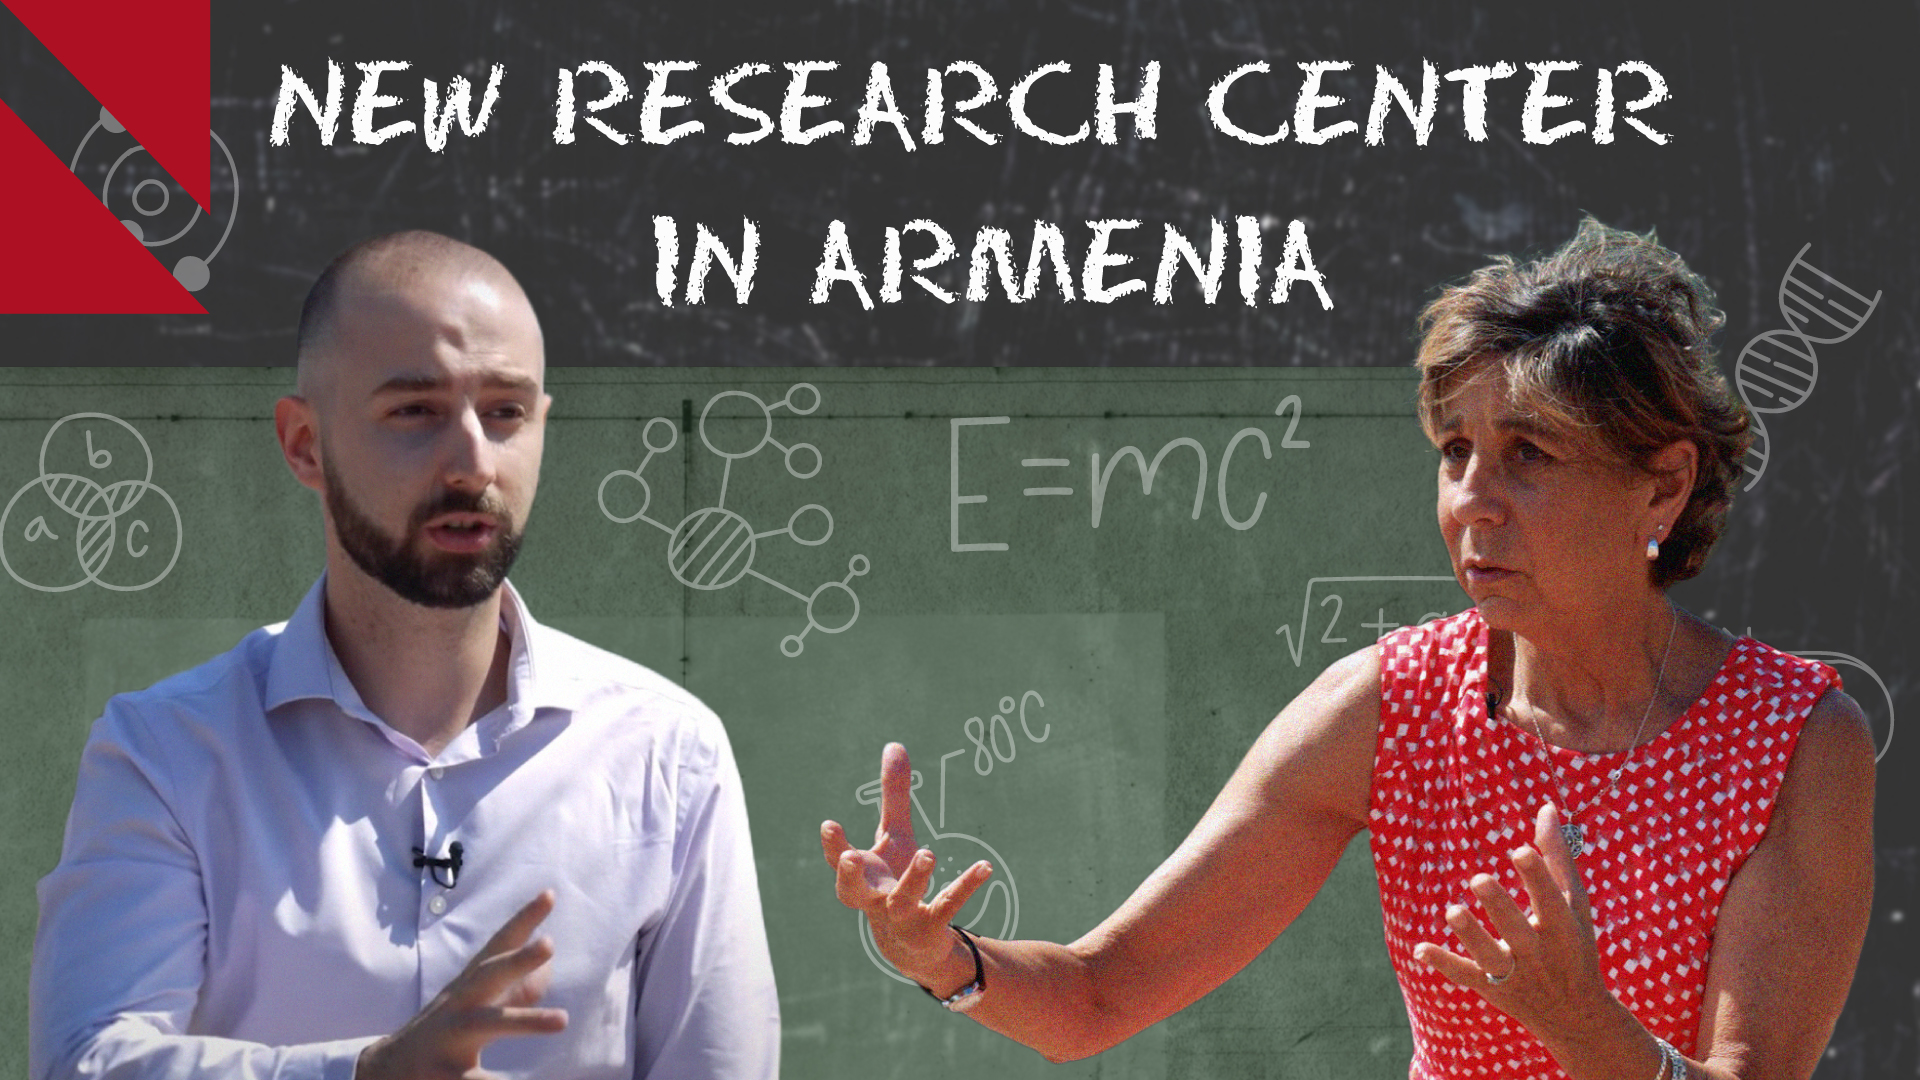 Establishing three bio research centers  in Armenia